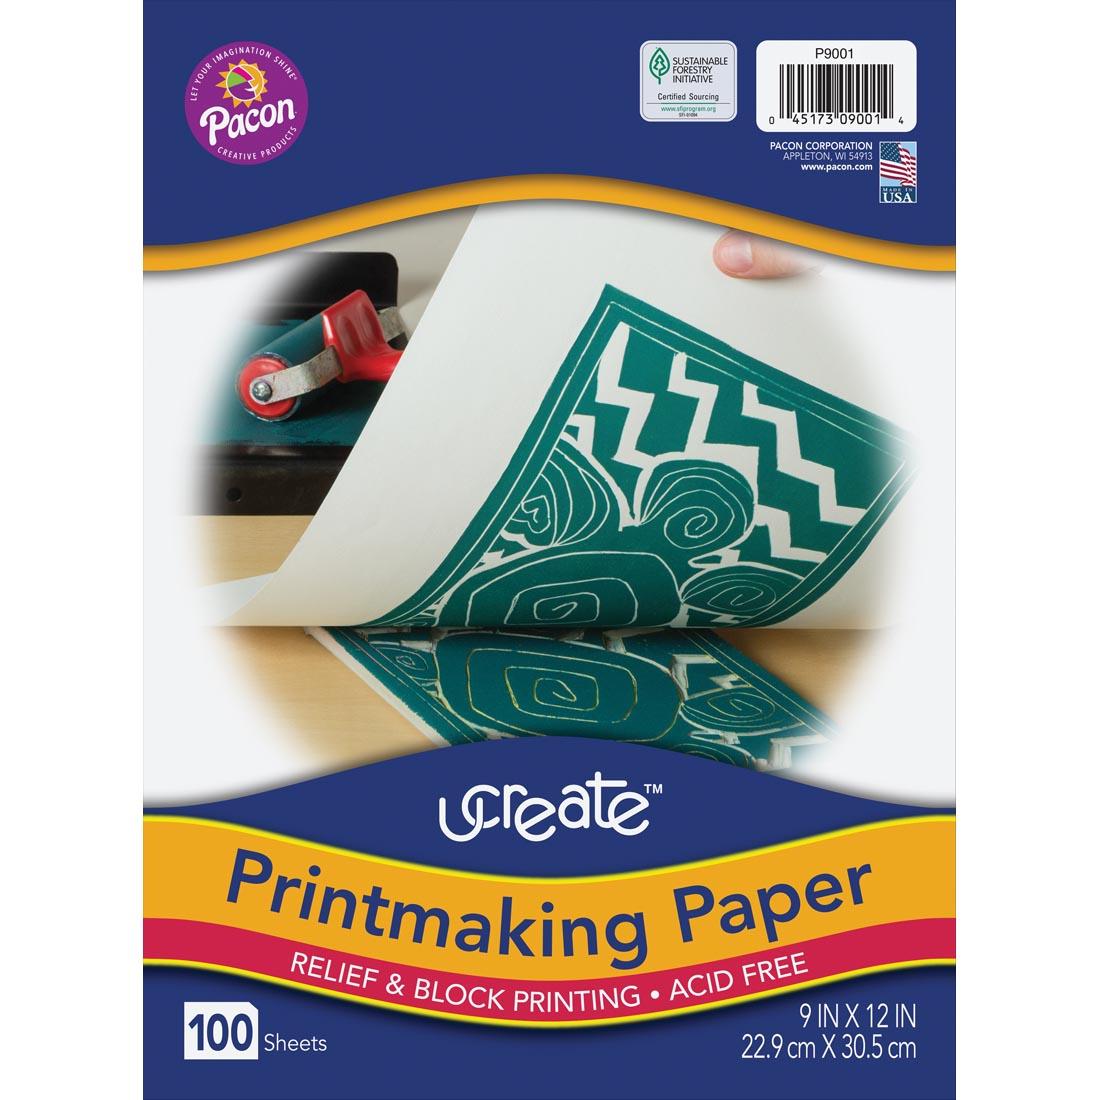 UCreate Printmaking Paper